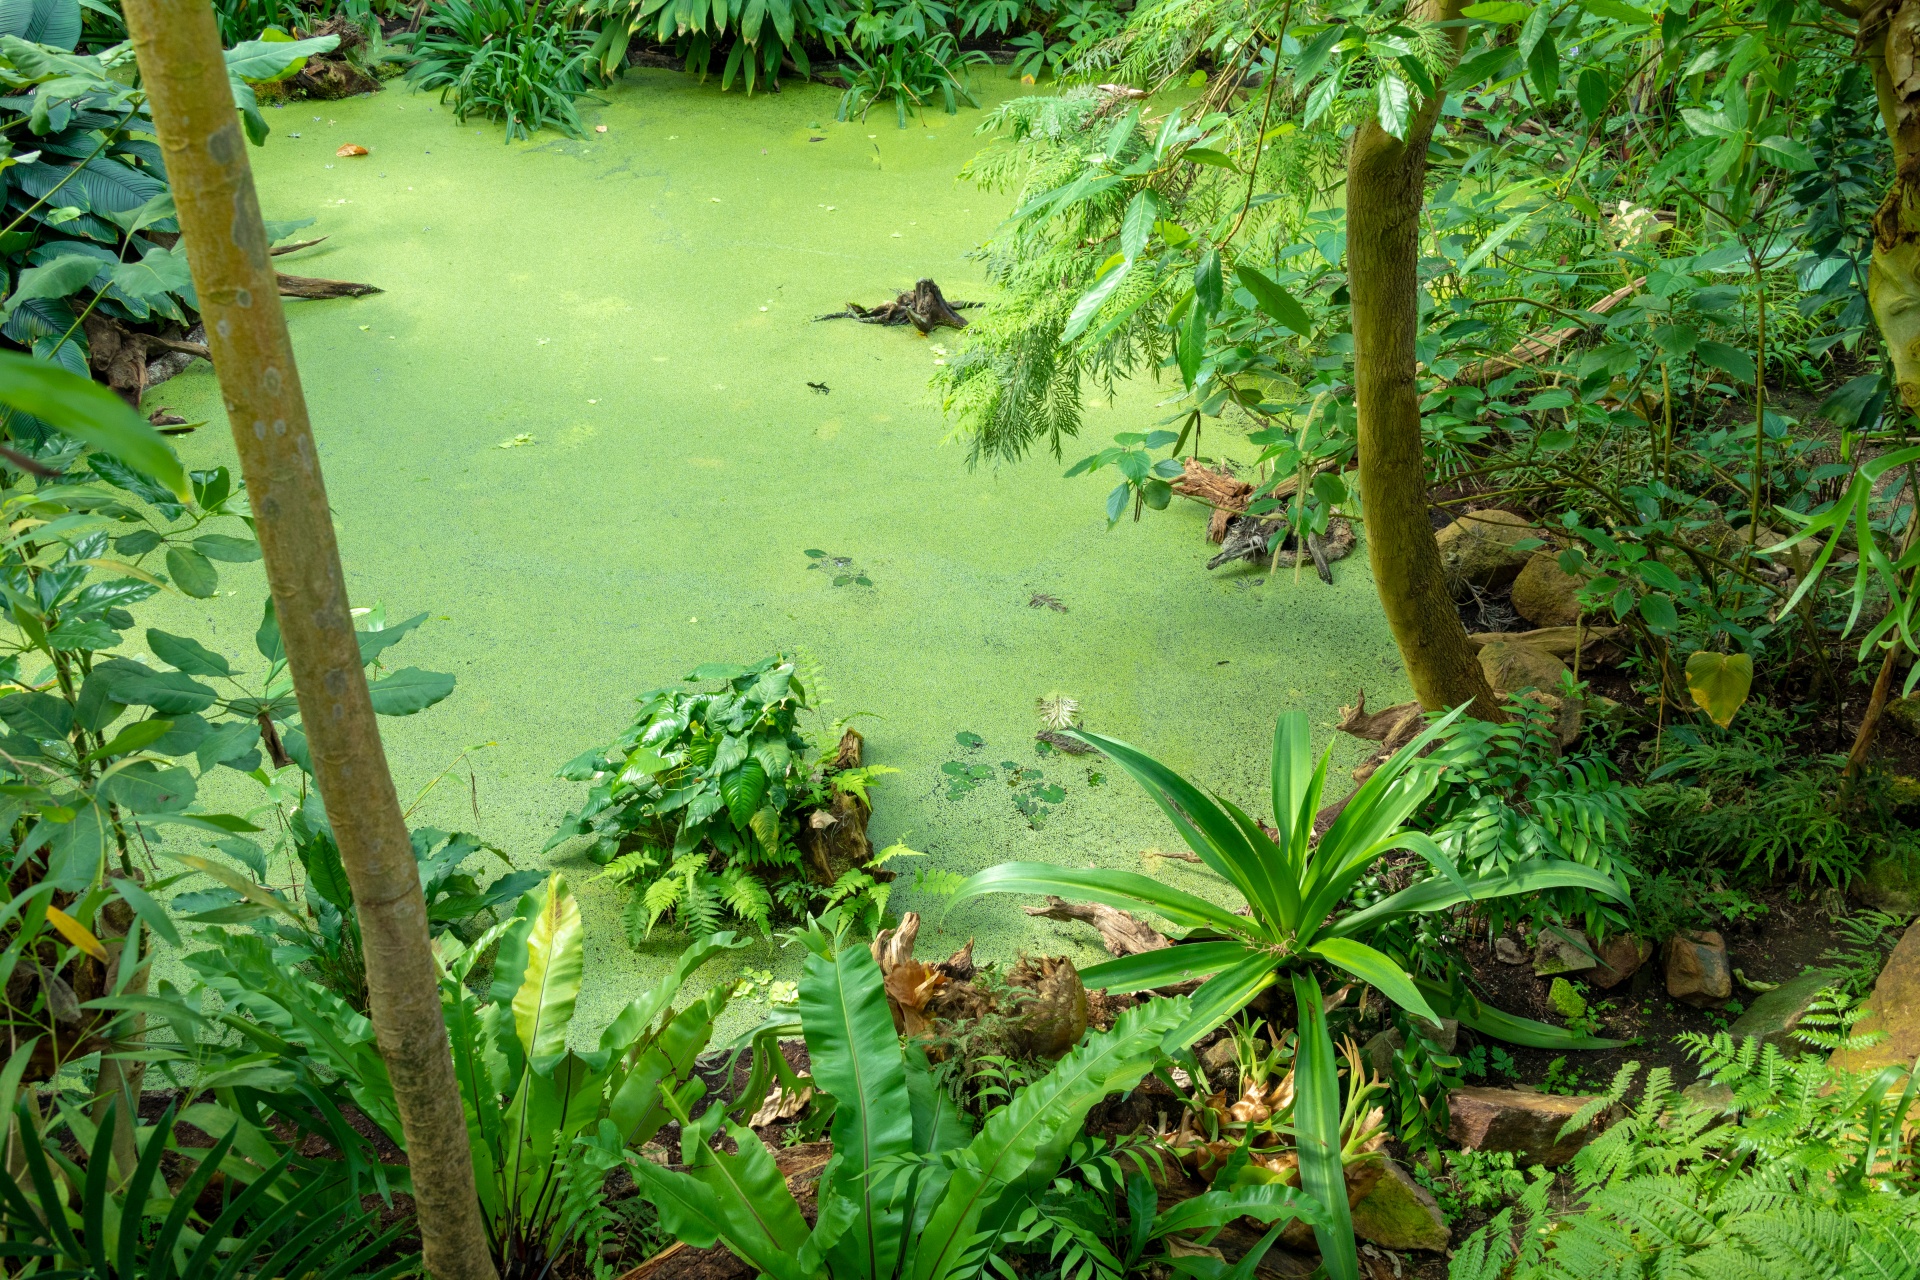 Jungle vegetation with algae covered pond